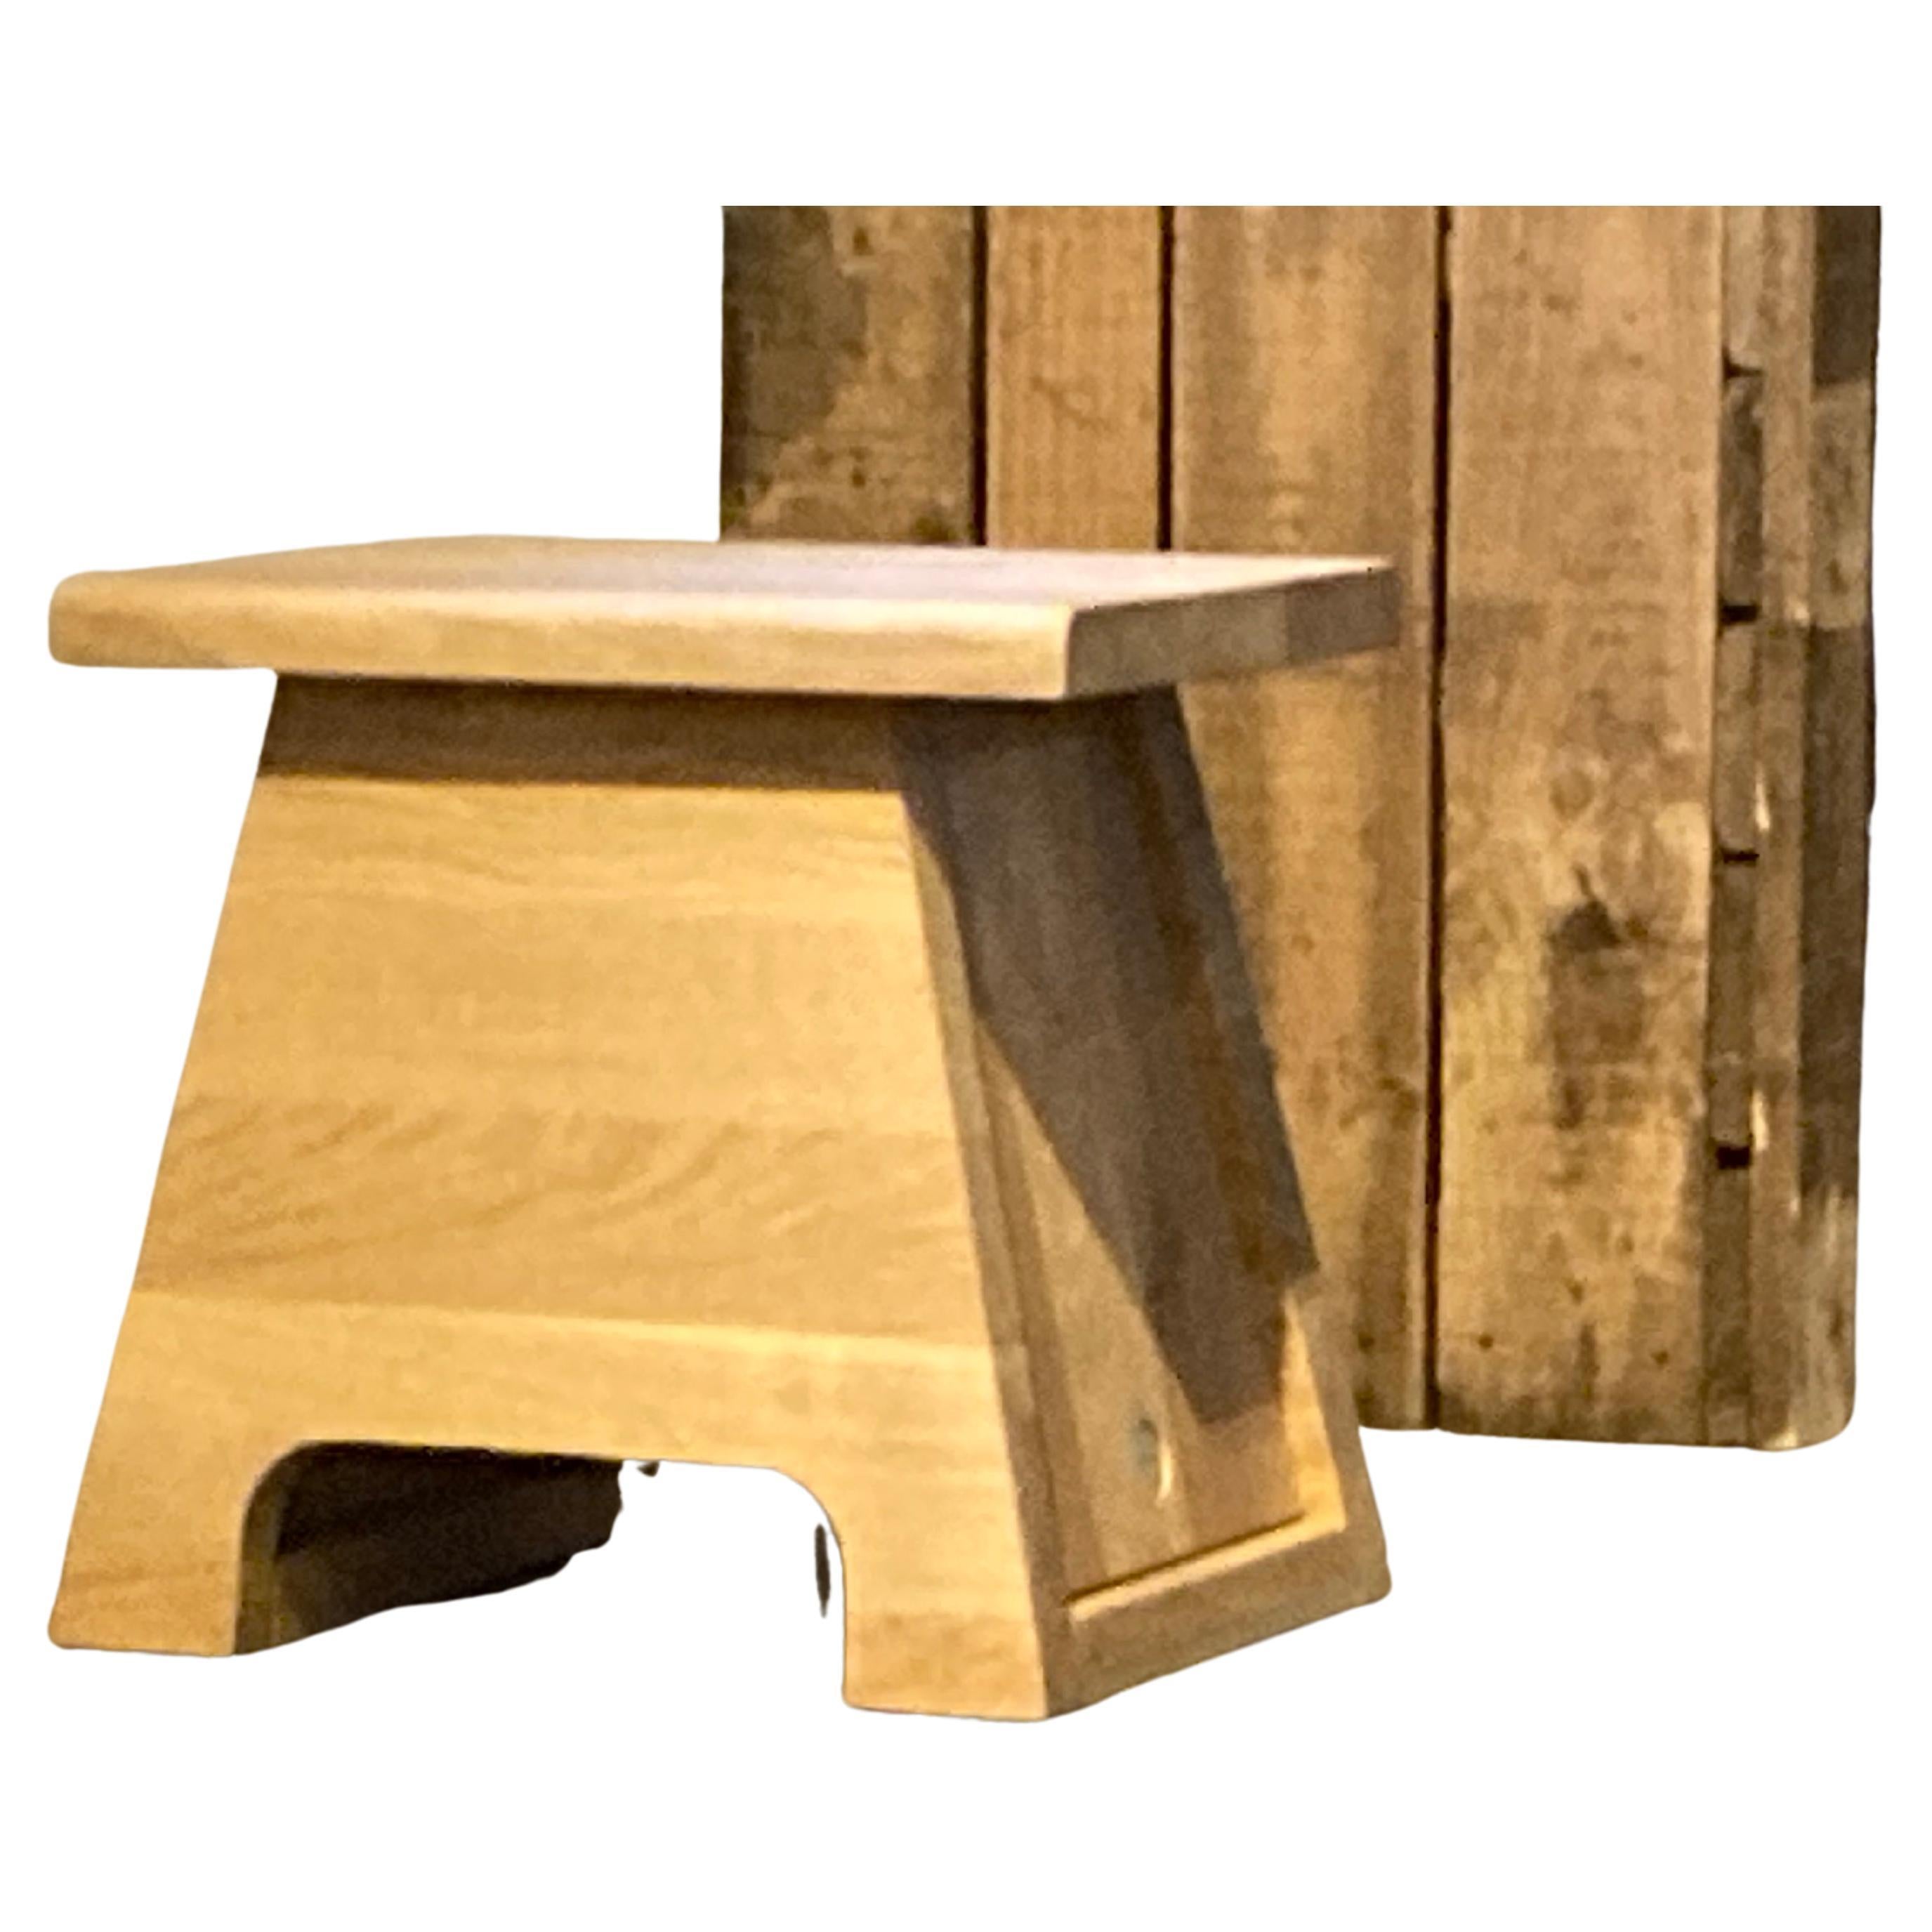 Contemporary Dutch Design Bench Side Table Harm De Veer Oak Wood For Sale